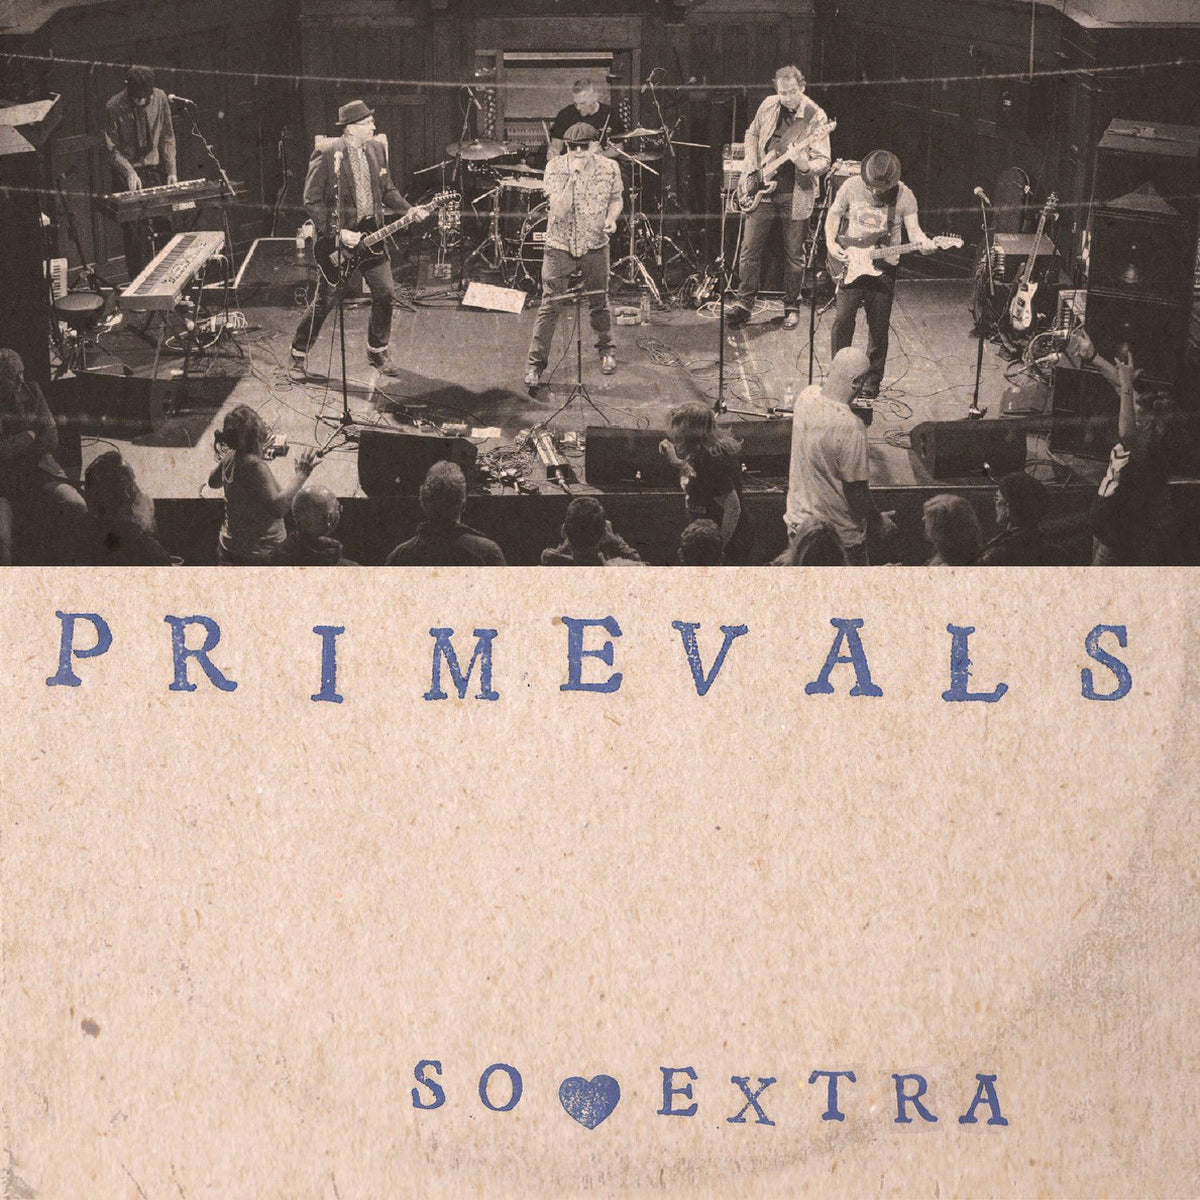 Primevals- So Extra 7” ~GHOST HIGHWAY RECORDINGS / LTD 150!